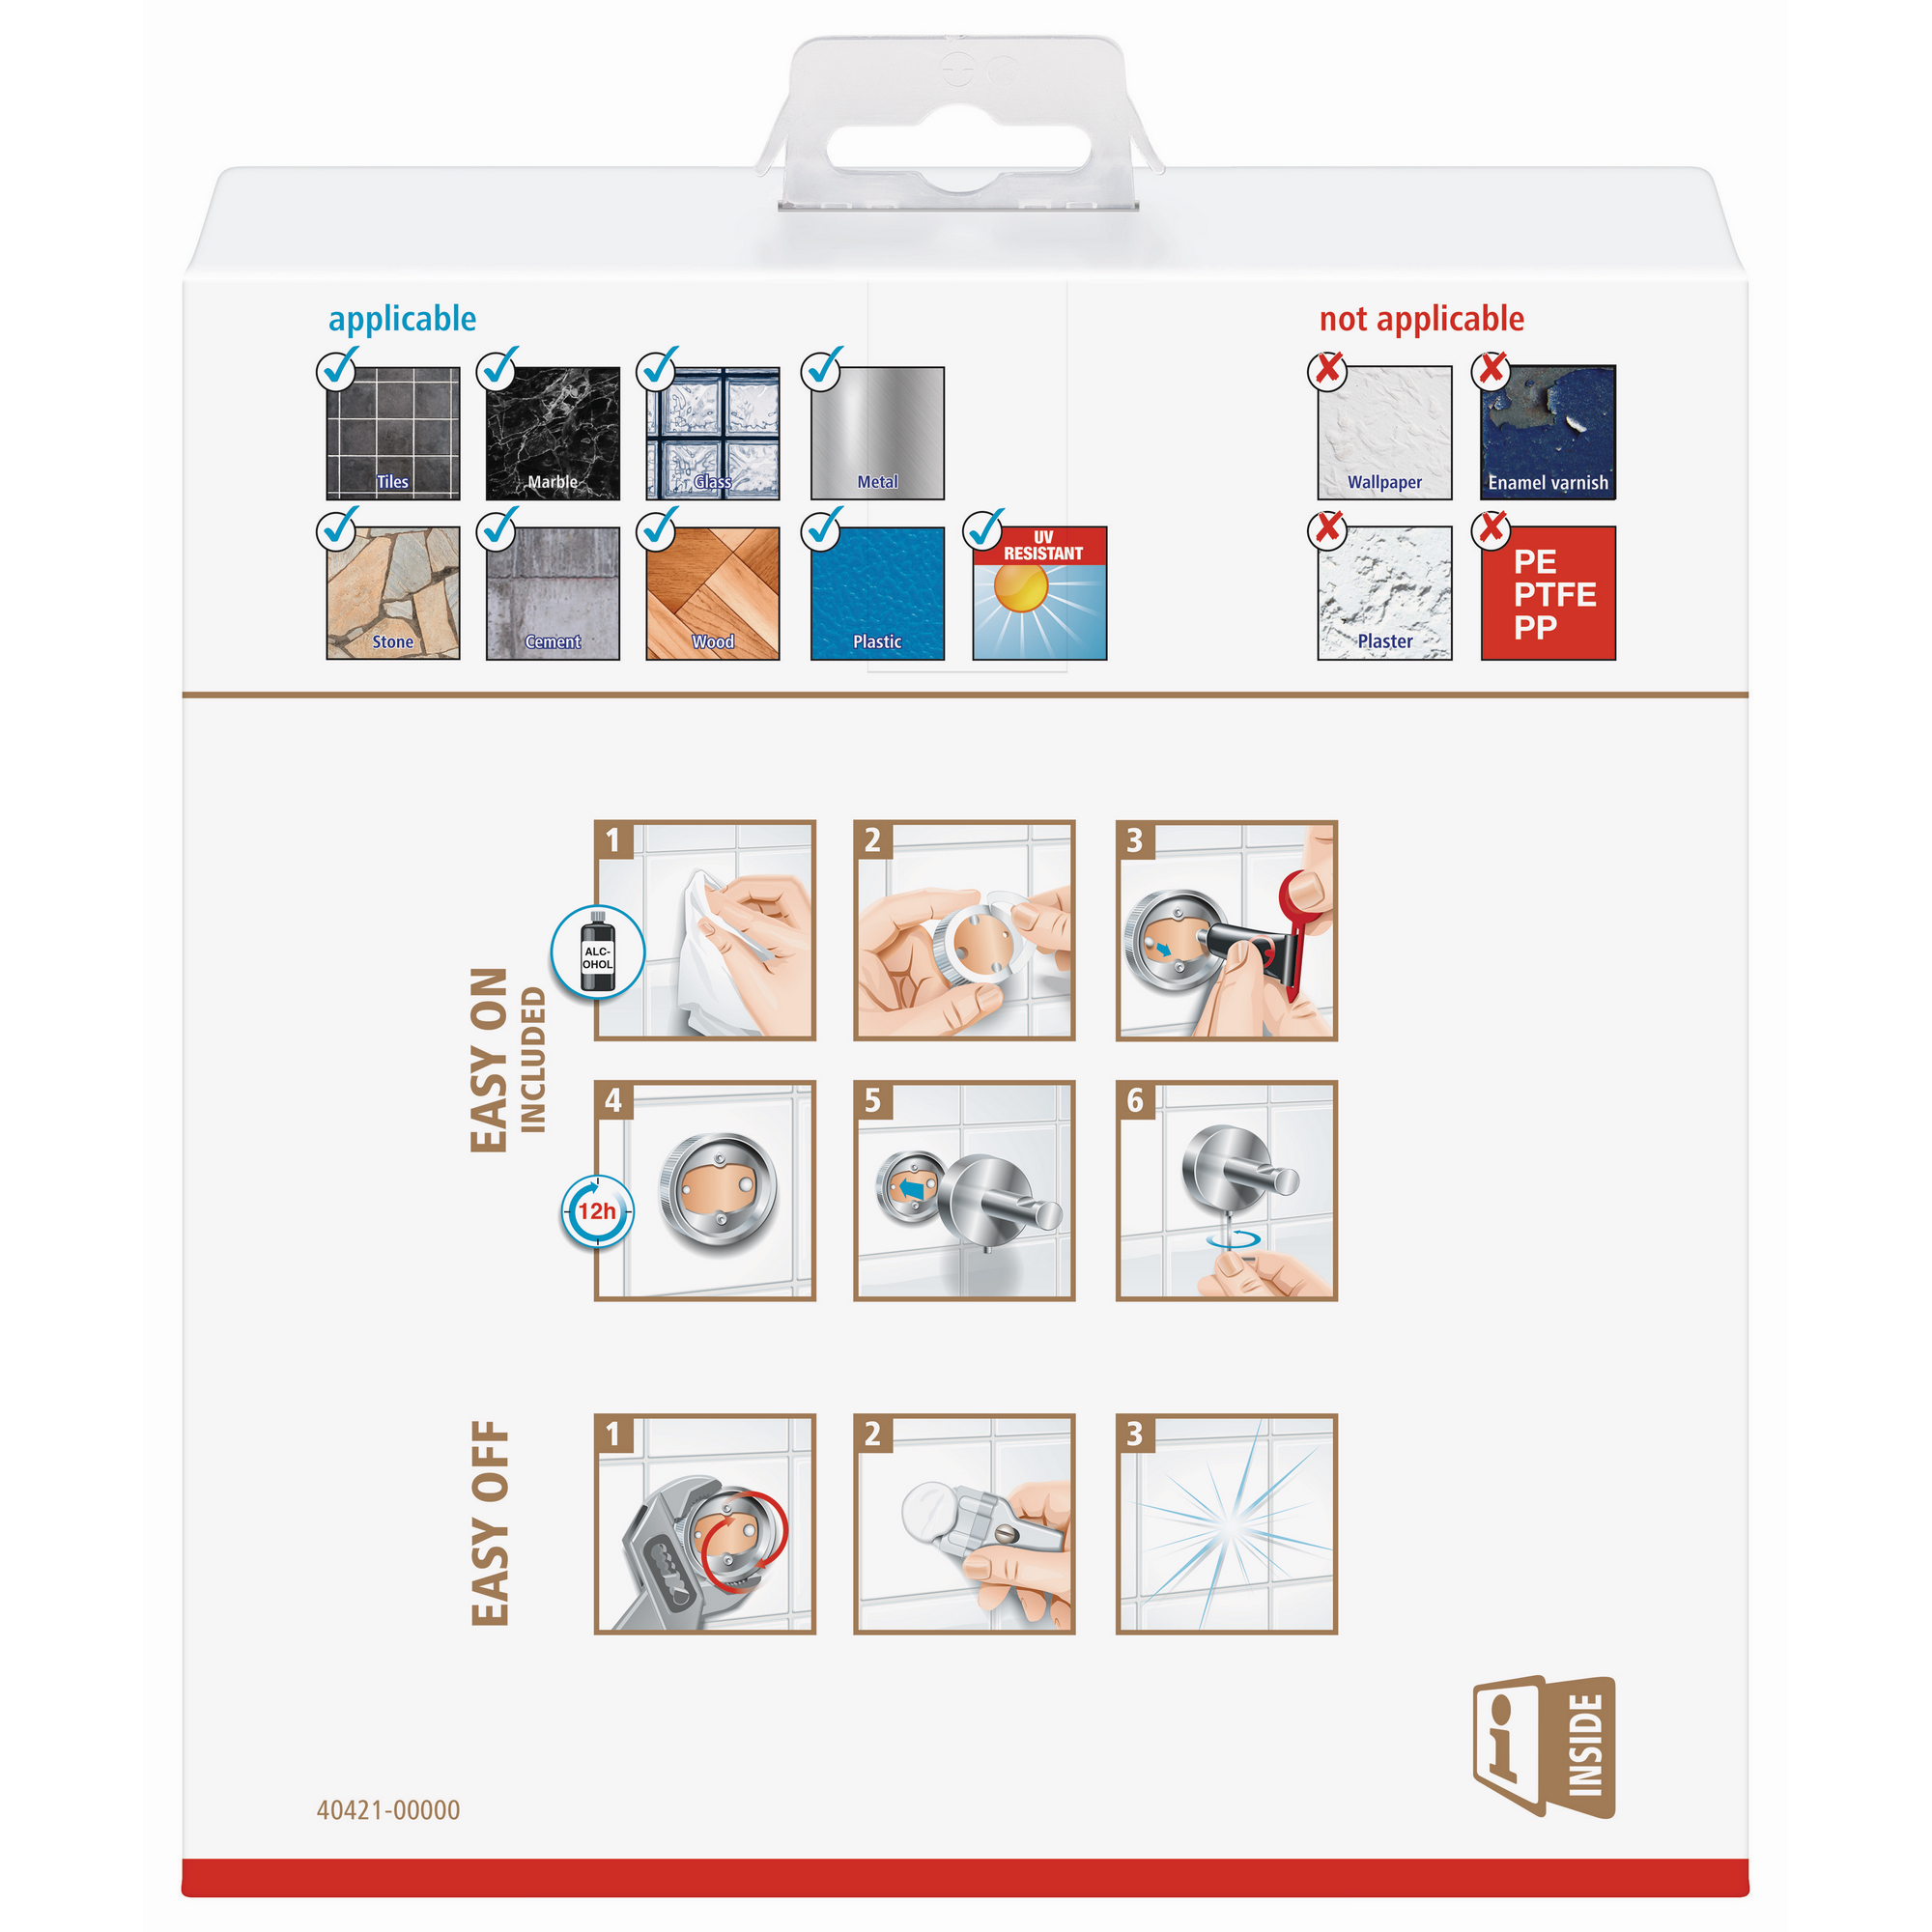 Handtuchring 'Exxclusiv' Edelstahloptik mit Klebelösung 18,5 x 15,6 x 4,5 cm + product picture